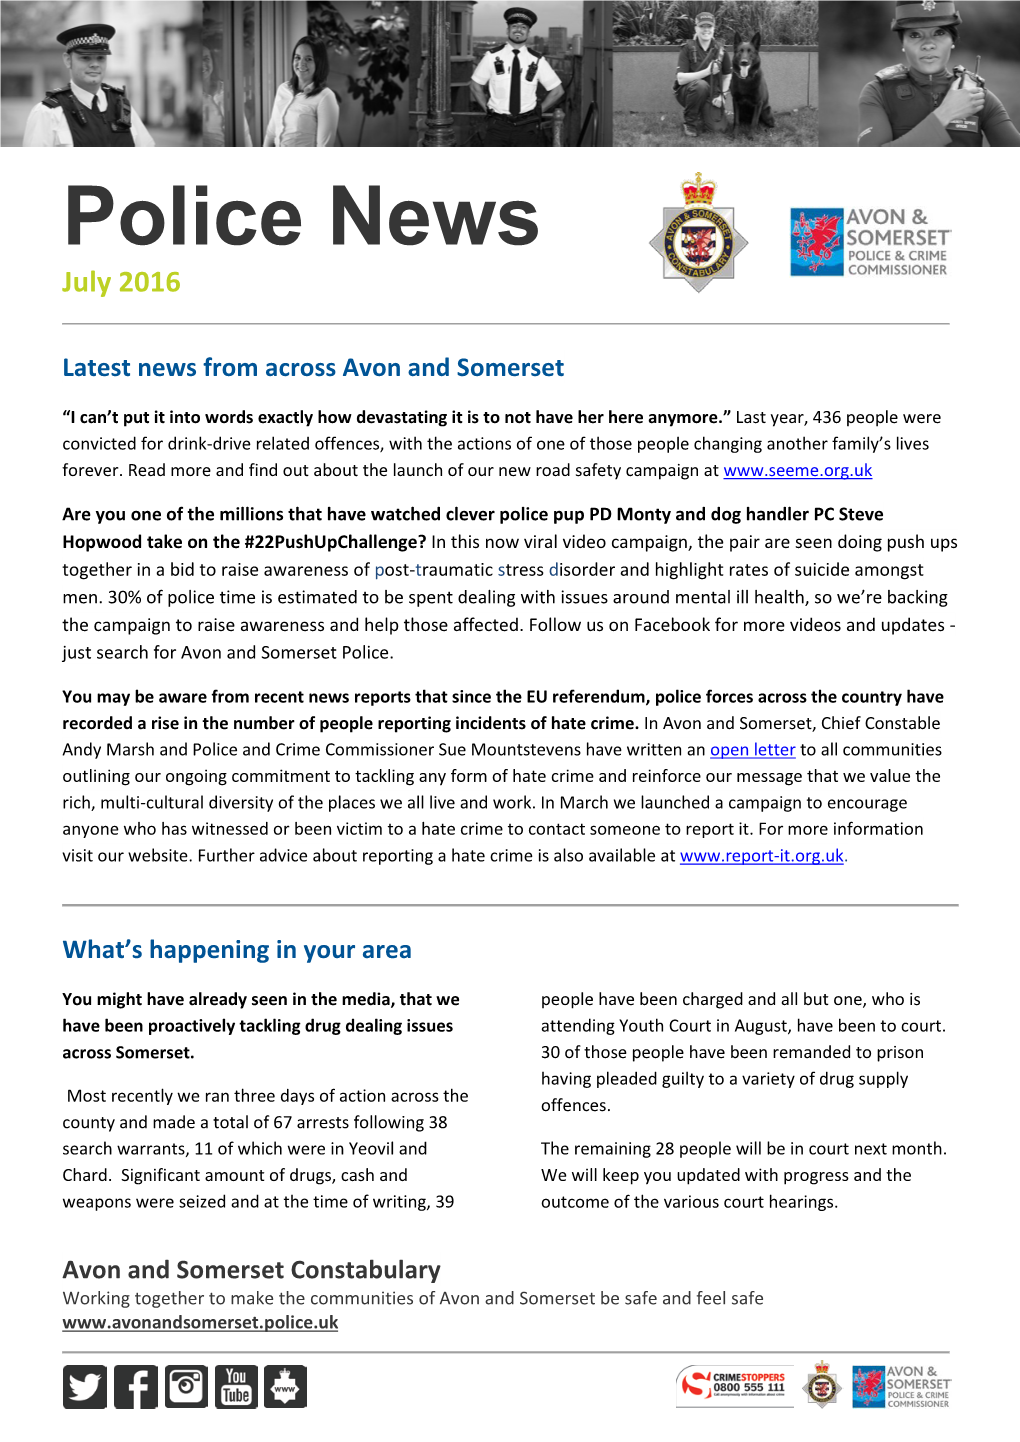 Police News July 2016